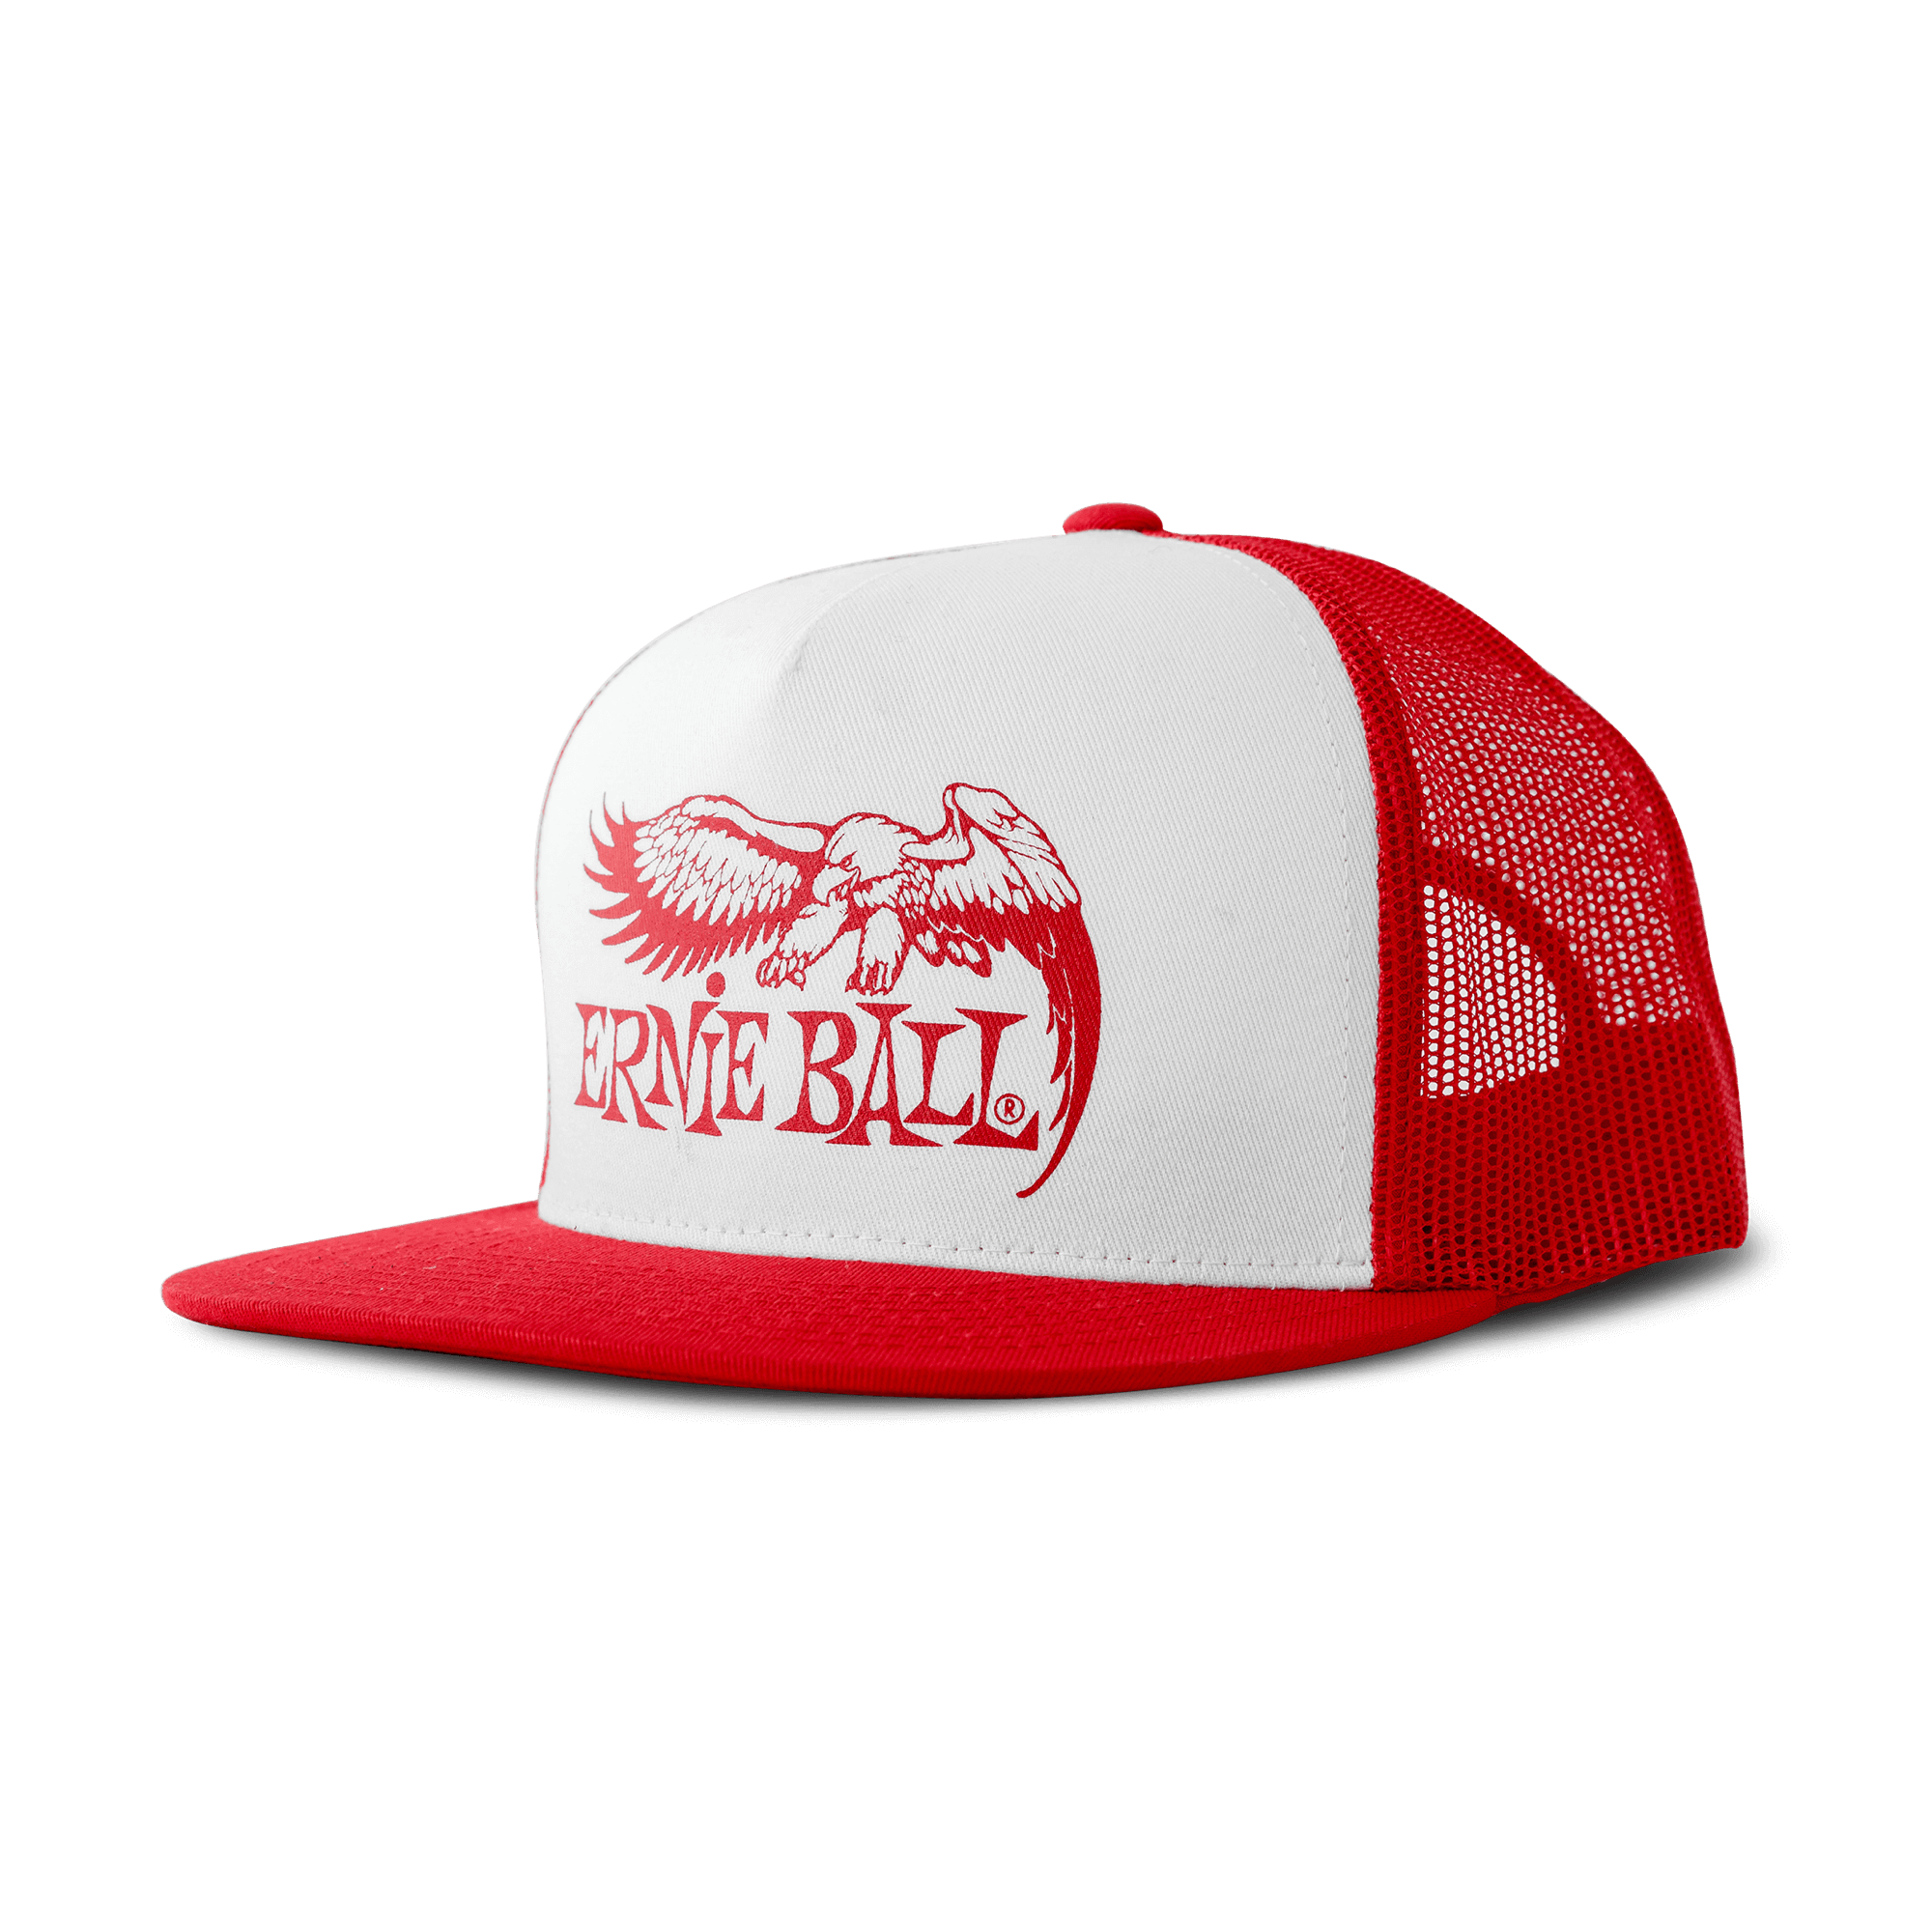 White with Red Ball Logo - Ernie Ball Eagle Logo Hat